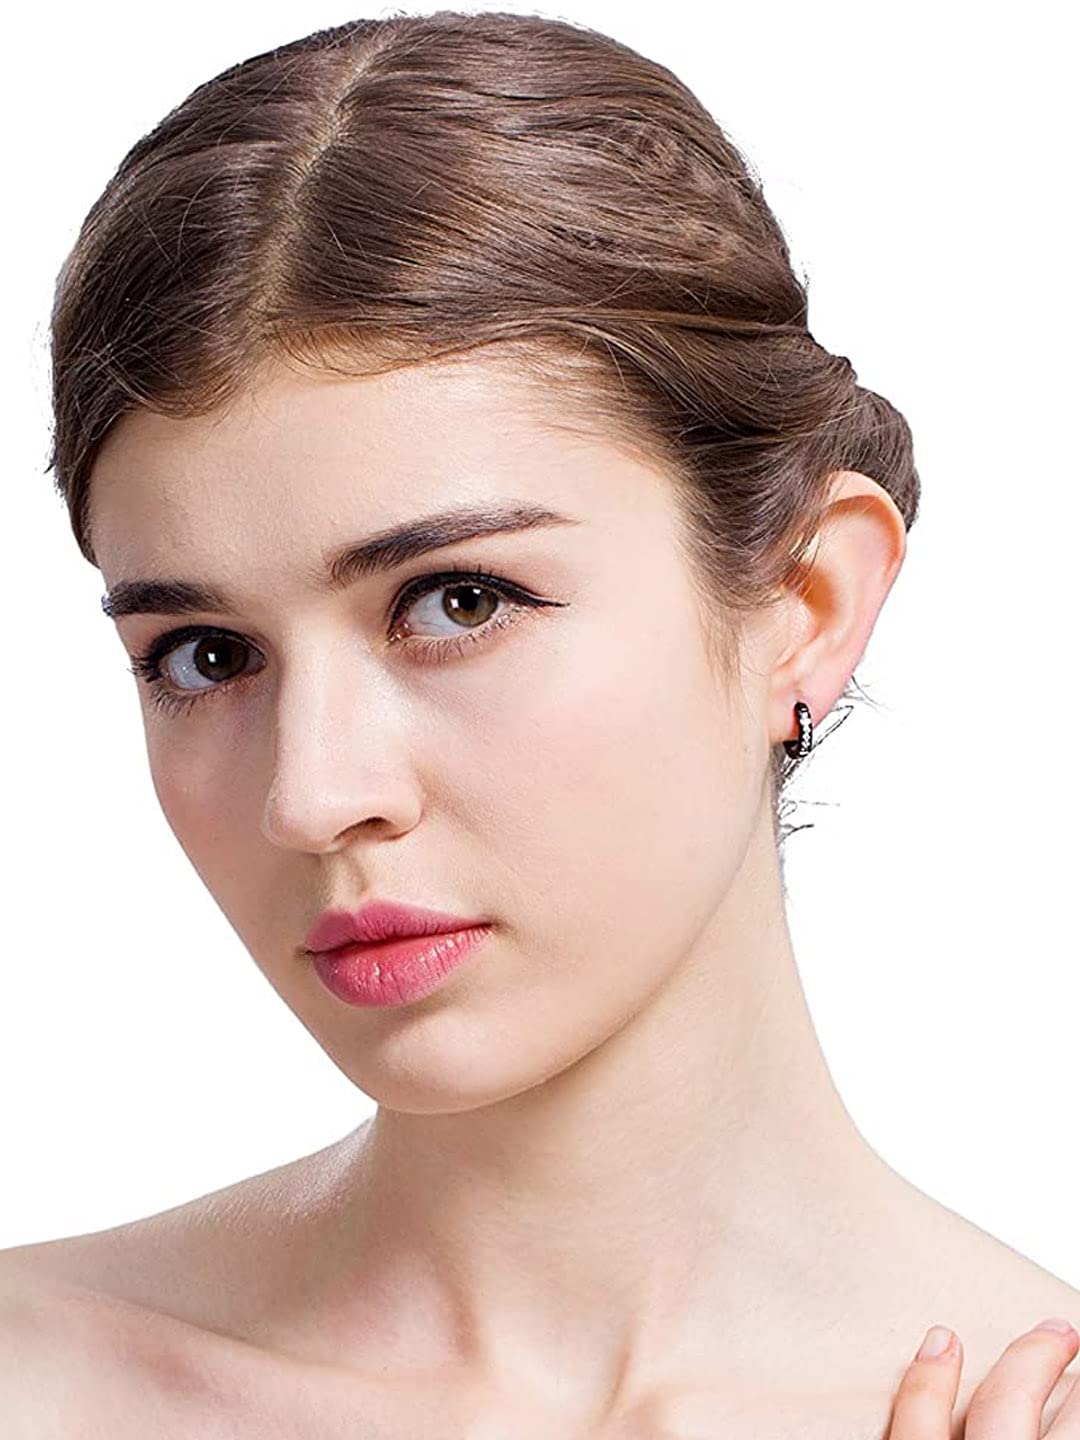 Yellow Chimes Hoop Earrings for Unisex Stainless Steel Crystal Black Hoops Earrings for Women and Men